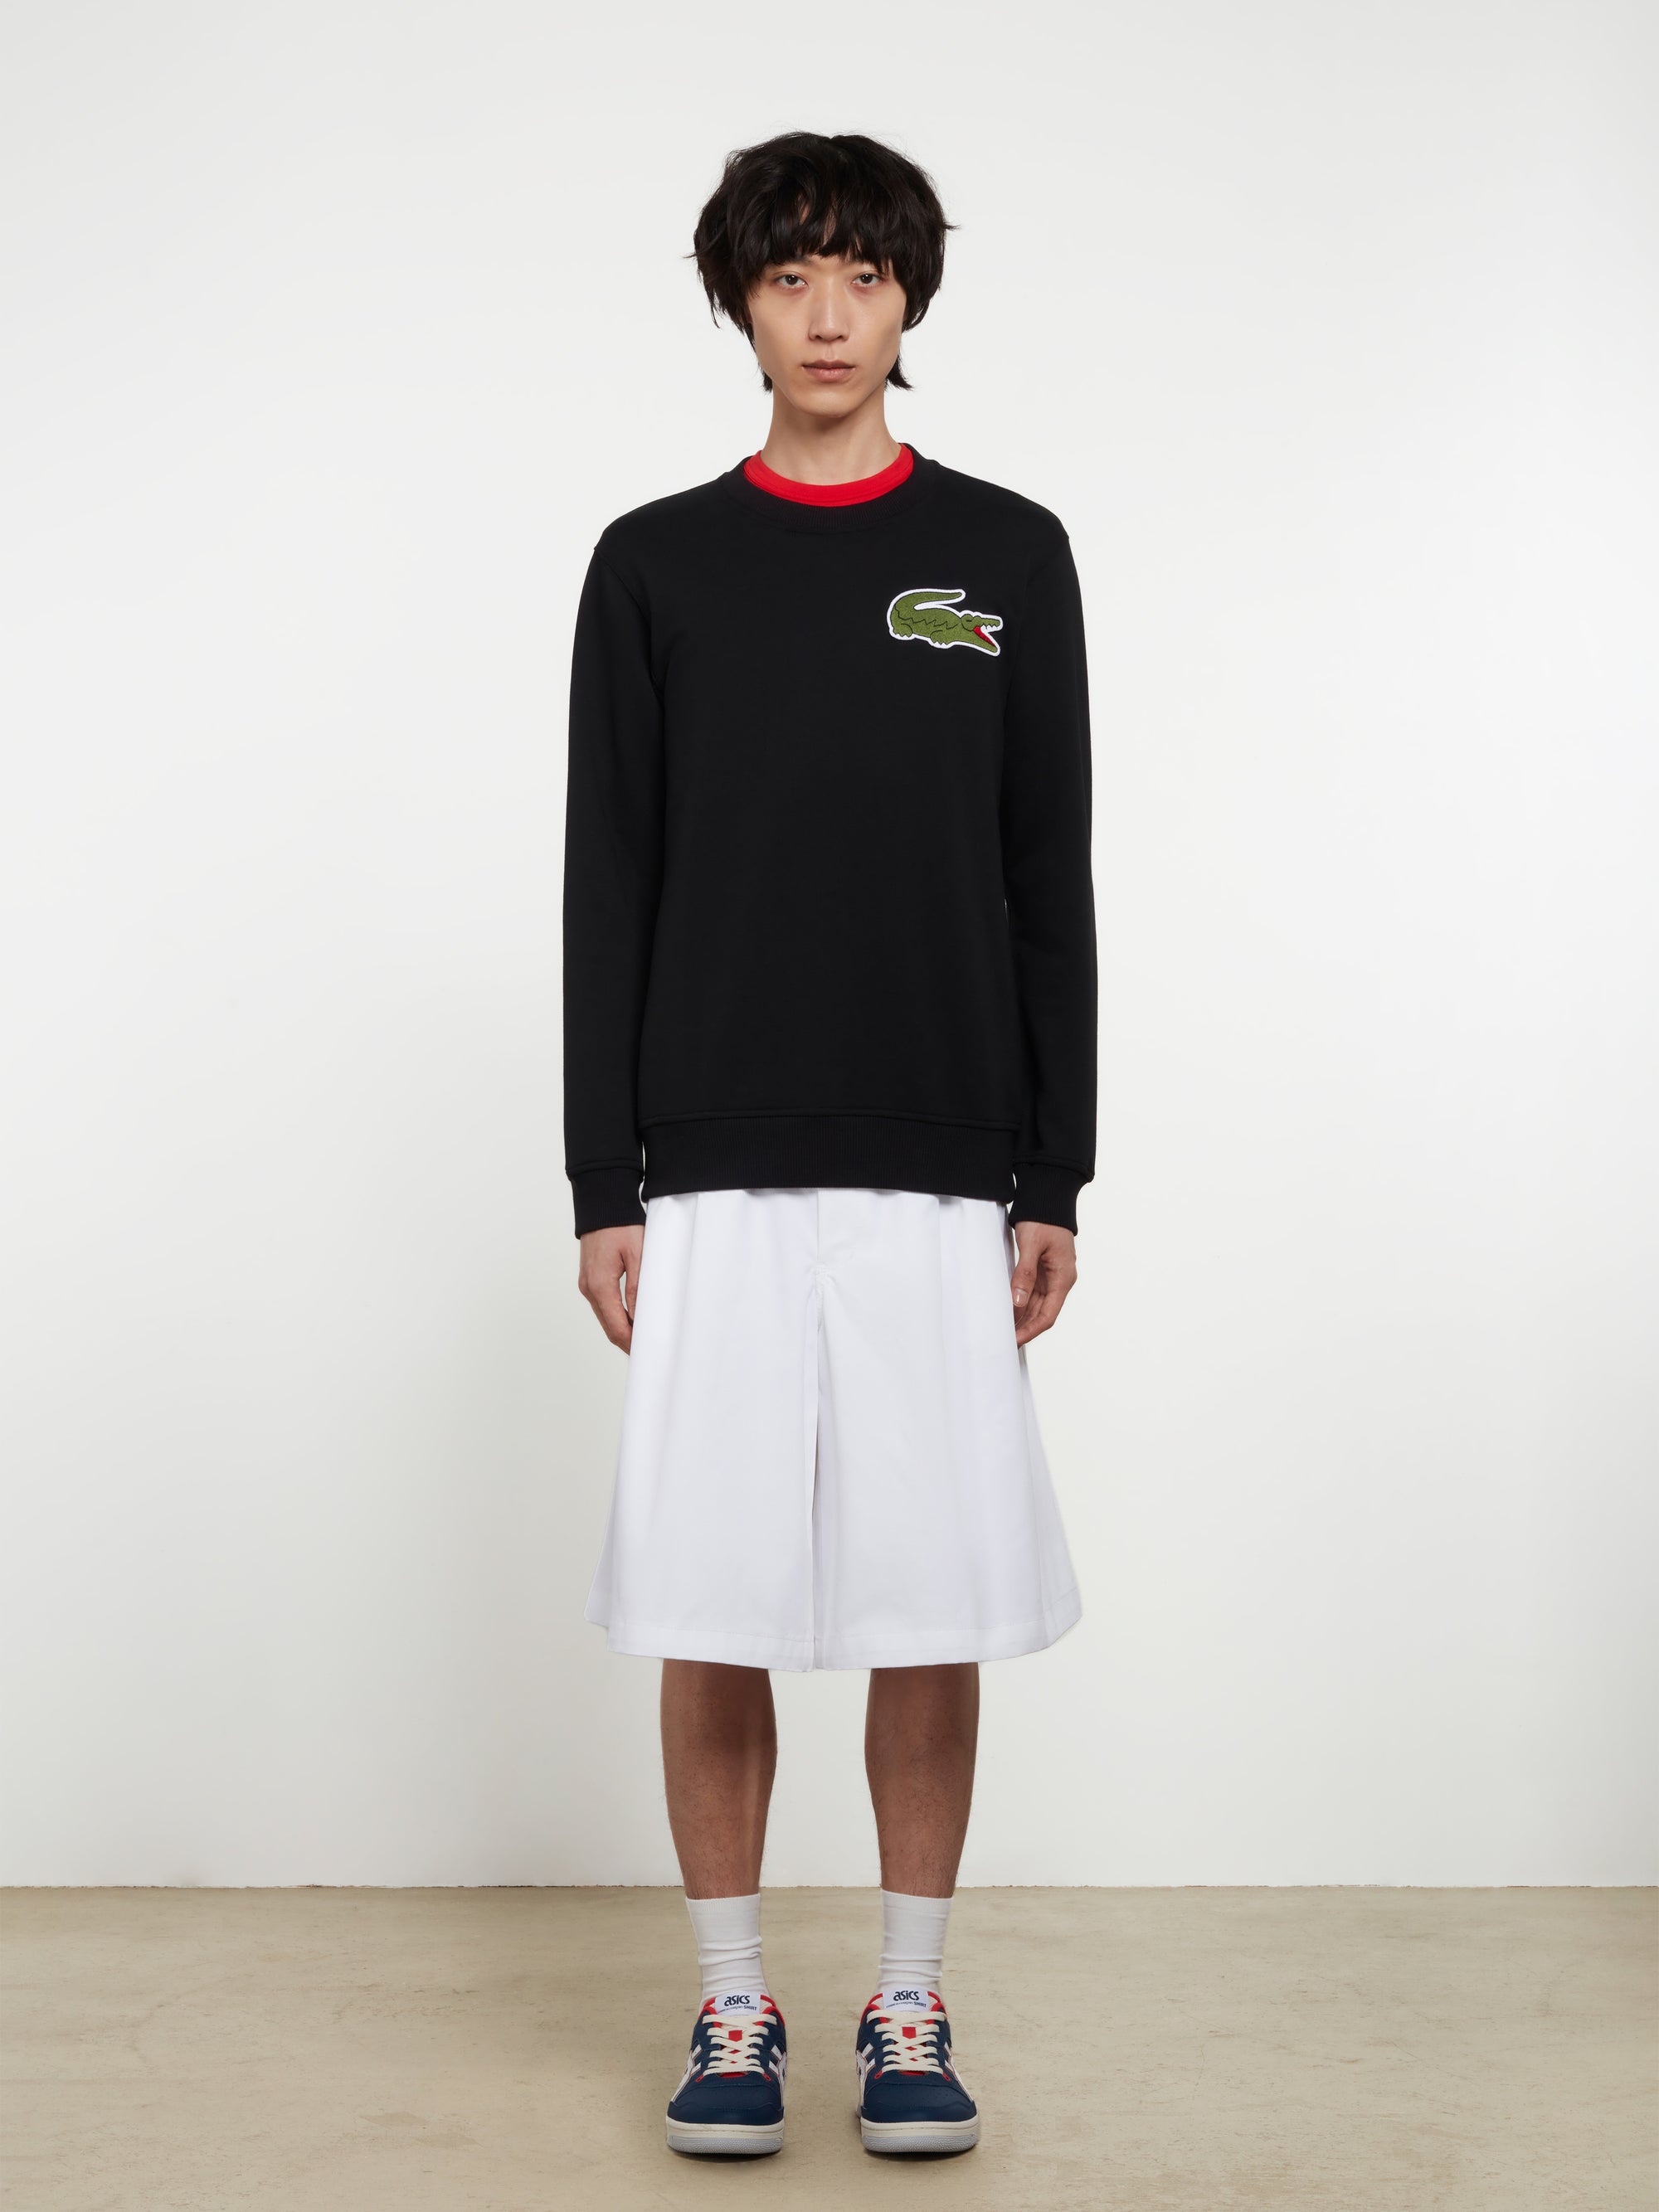 CDG Shirt - Lacoste Men's Cotton Sweatshirt - (Black) view 4